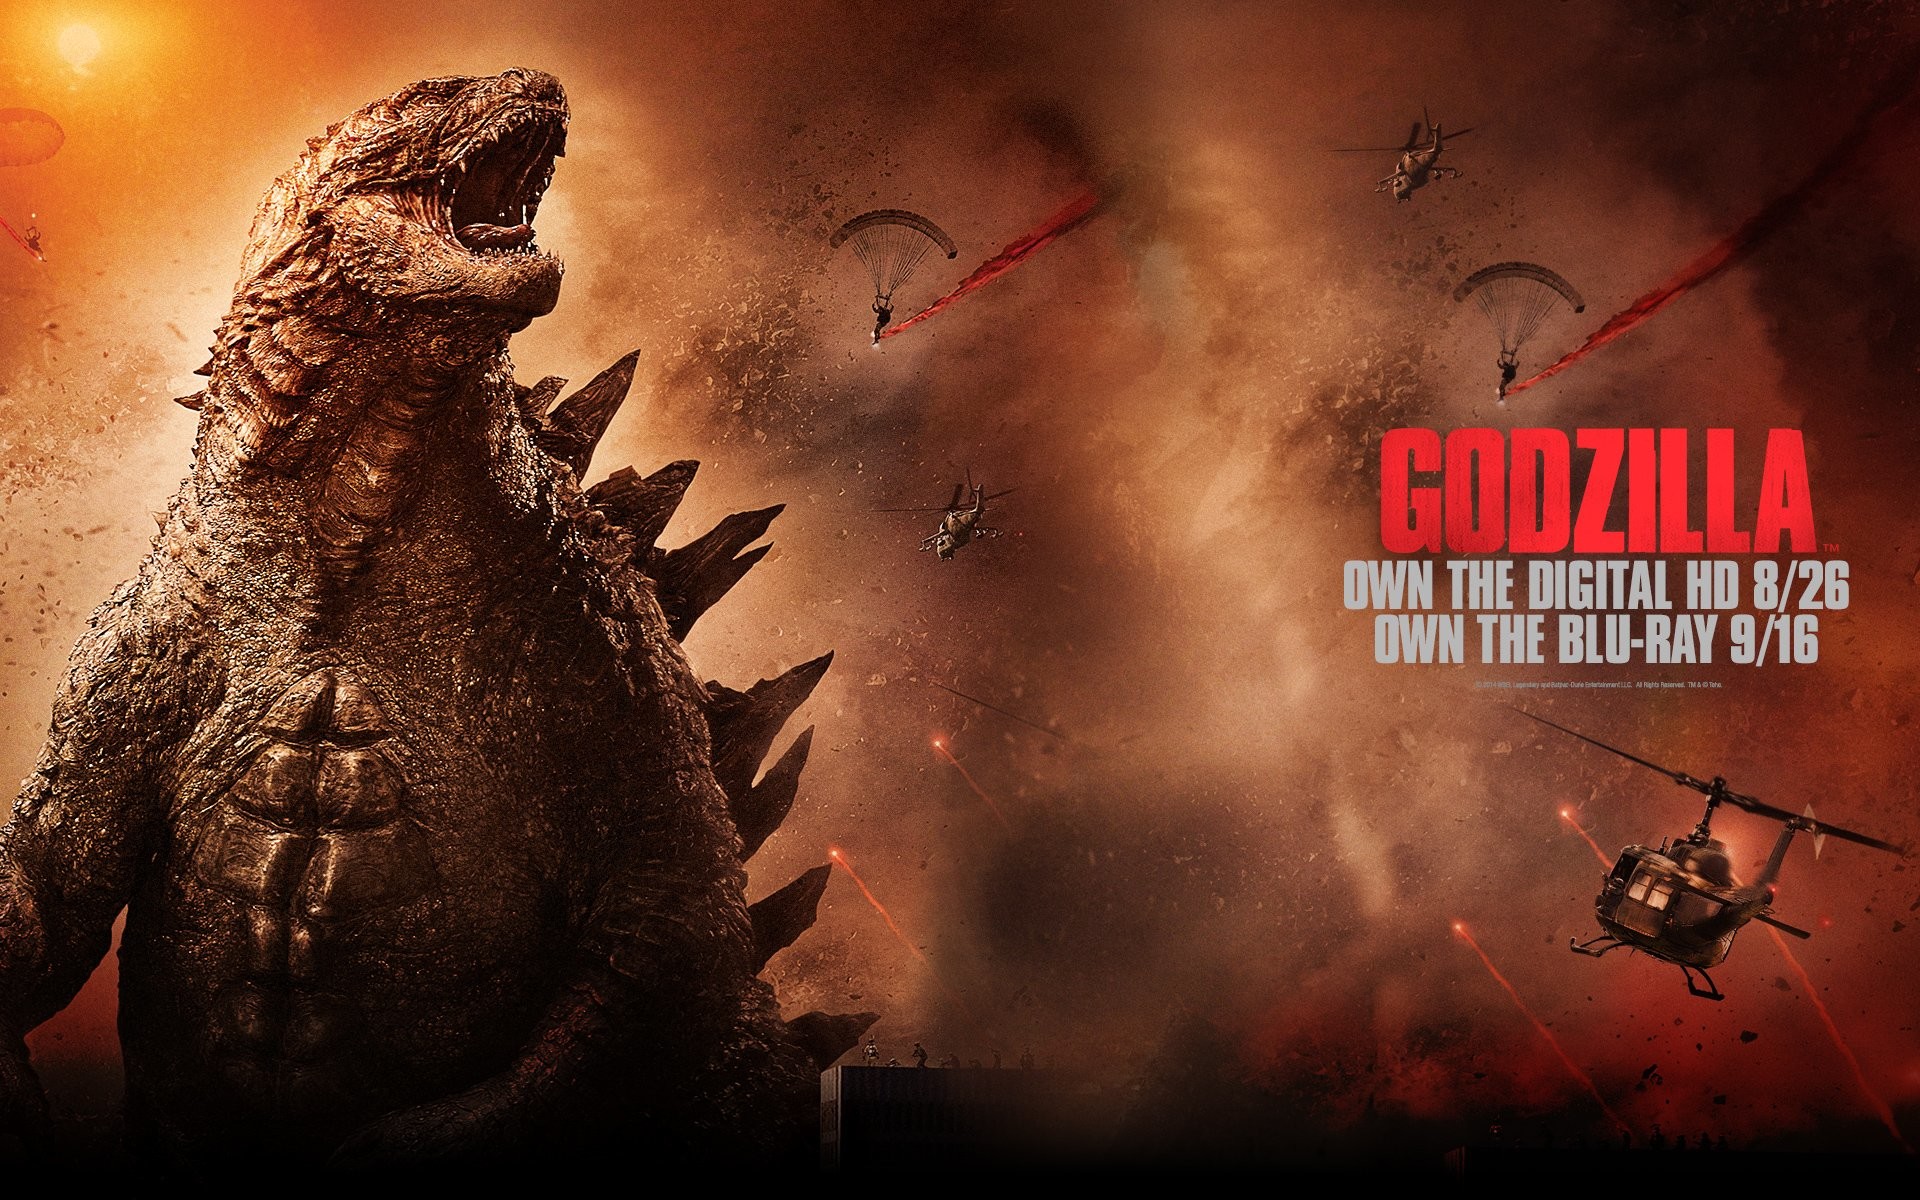 1920x1200 Image - Godzilla 2014 Digital HD 8 26 Blu-ray 9 16 Twitter.jpeg | Gojipedia  | FANDOM powered by Wikia